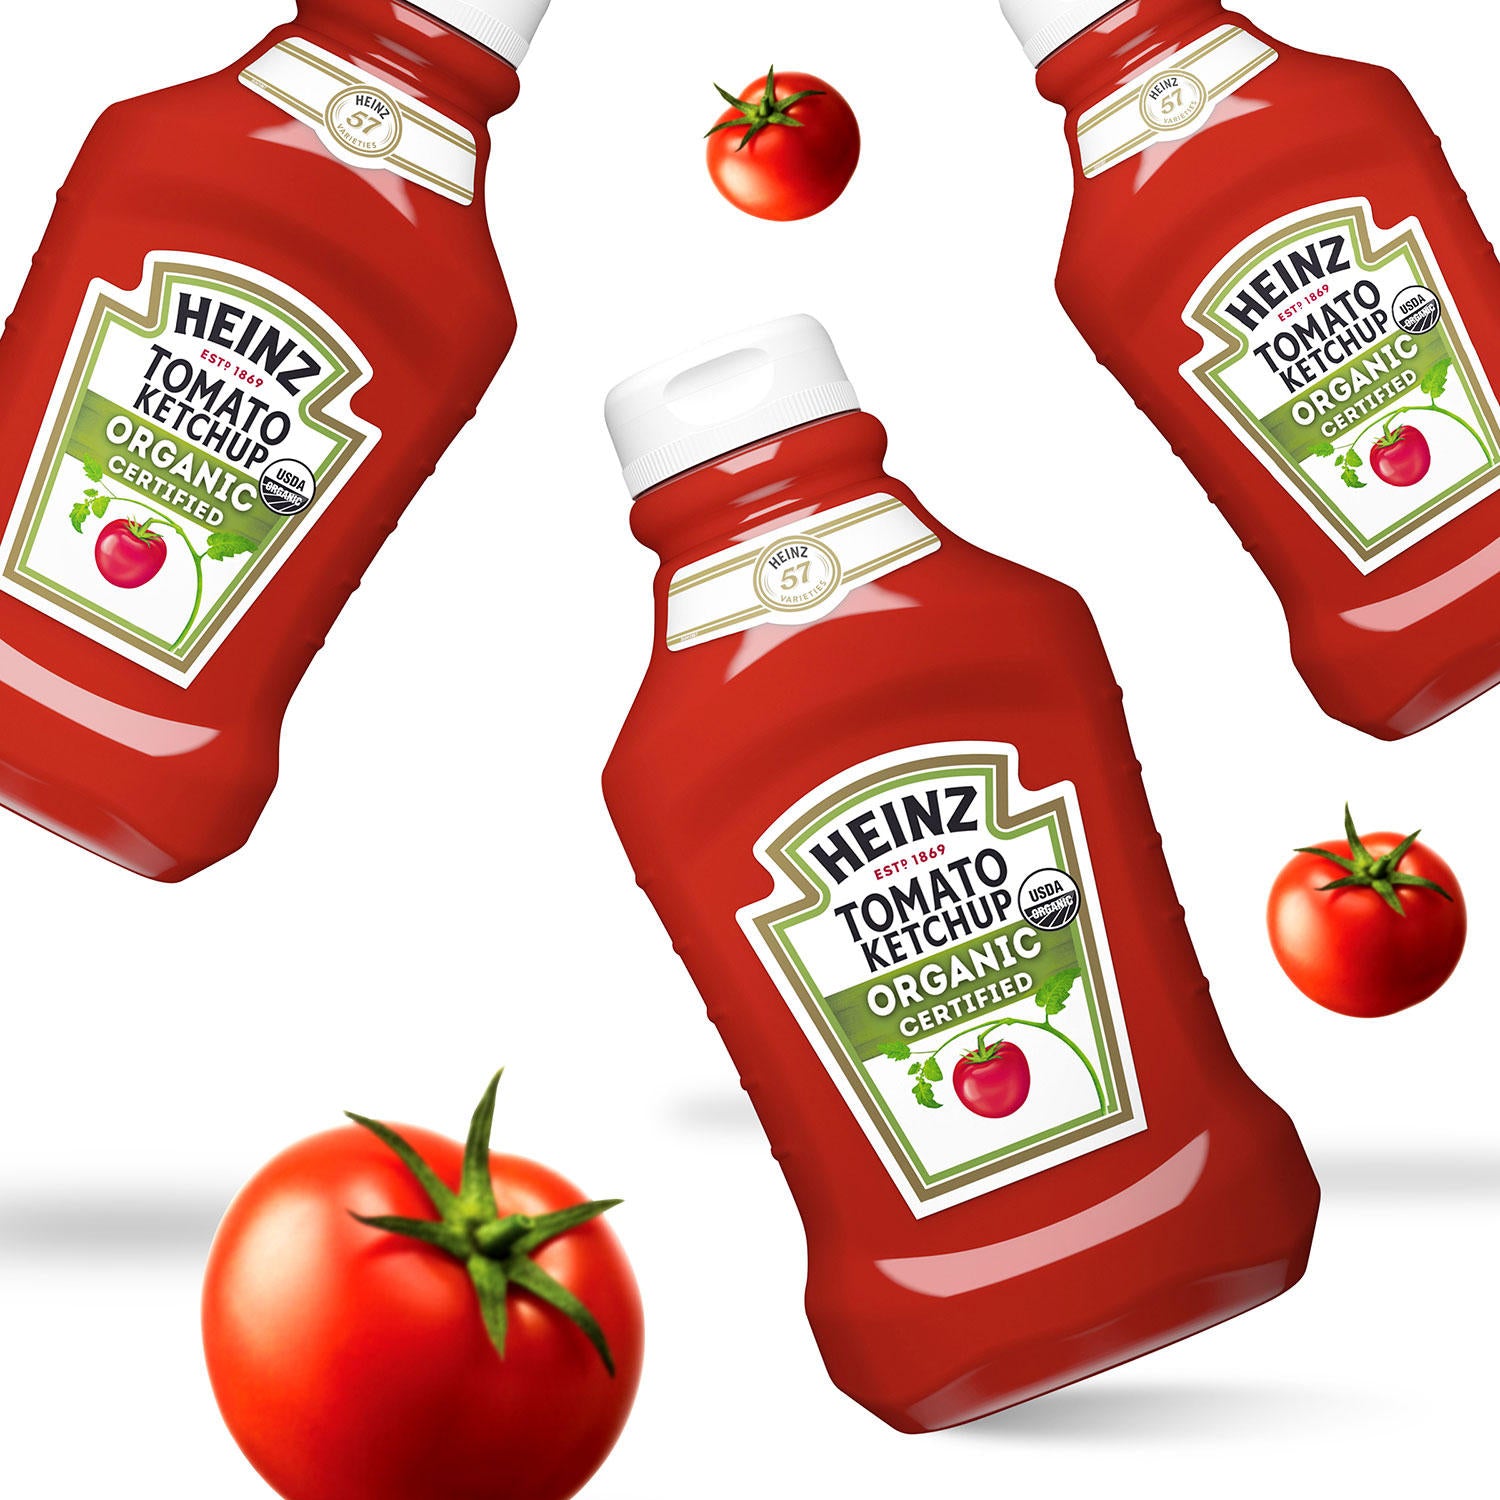 Heinz Ketchup, 44 oz